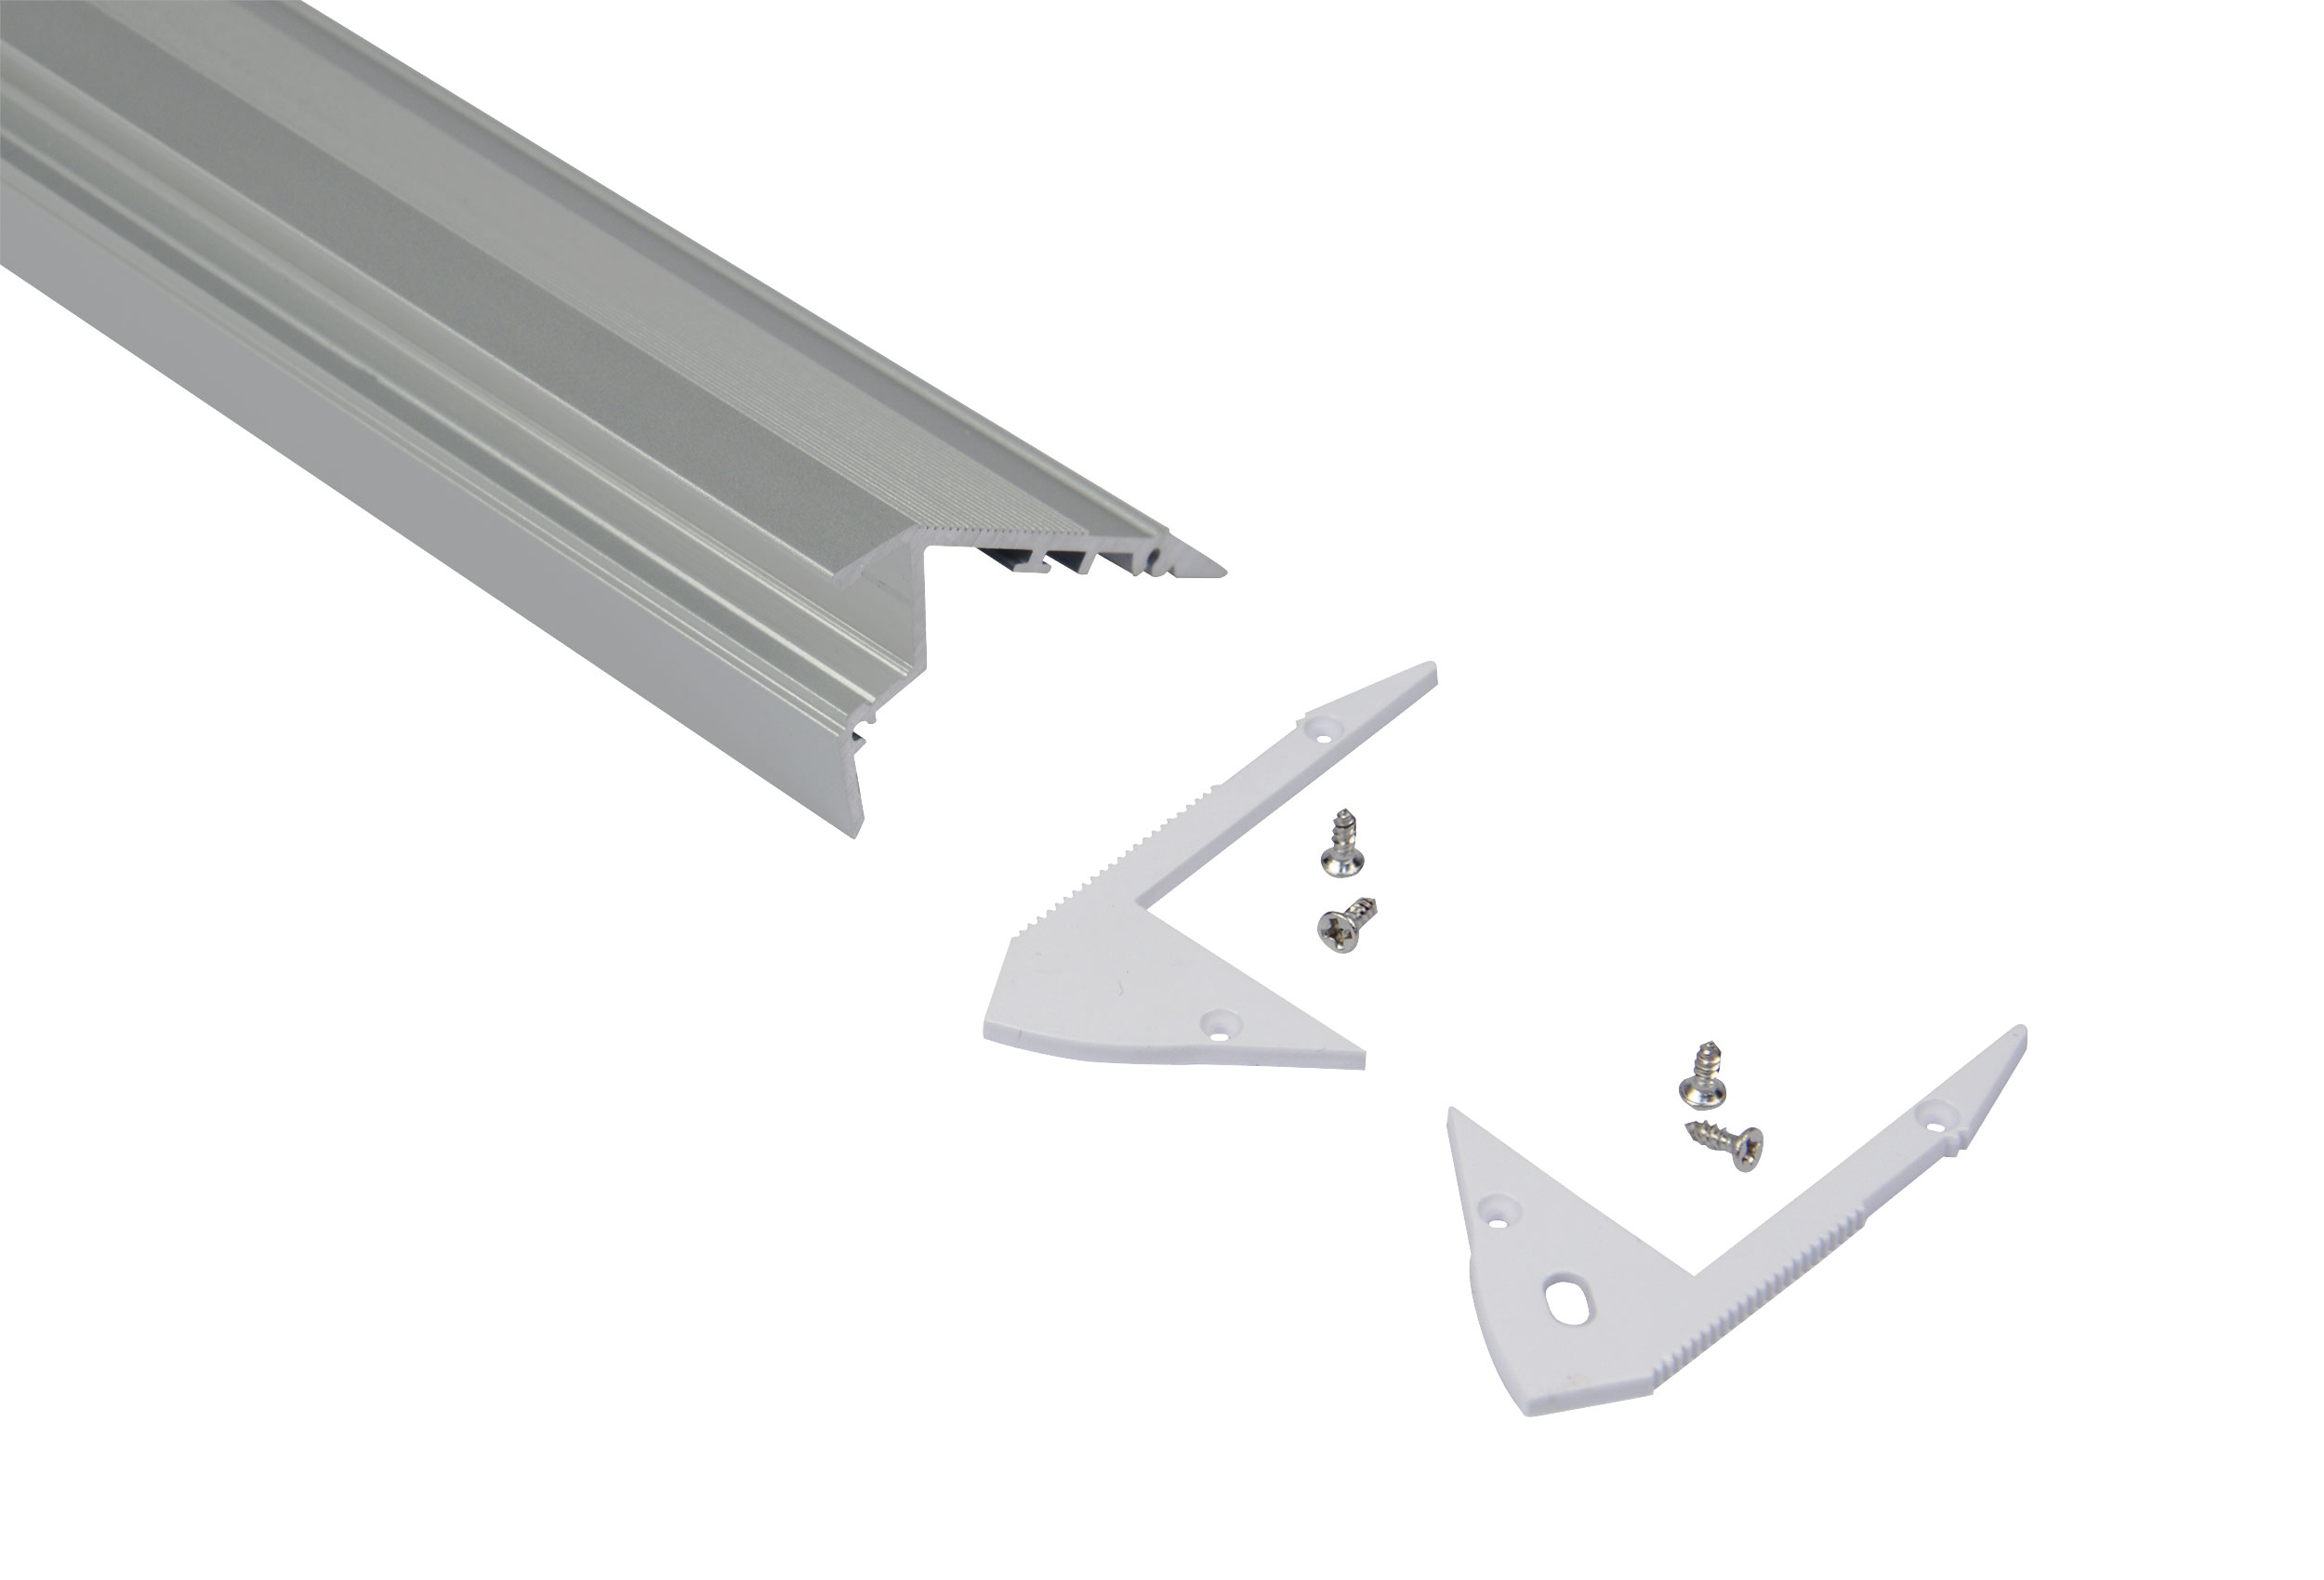 Aluminium prole stair nosing - length 2m